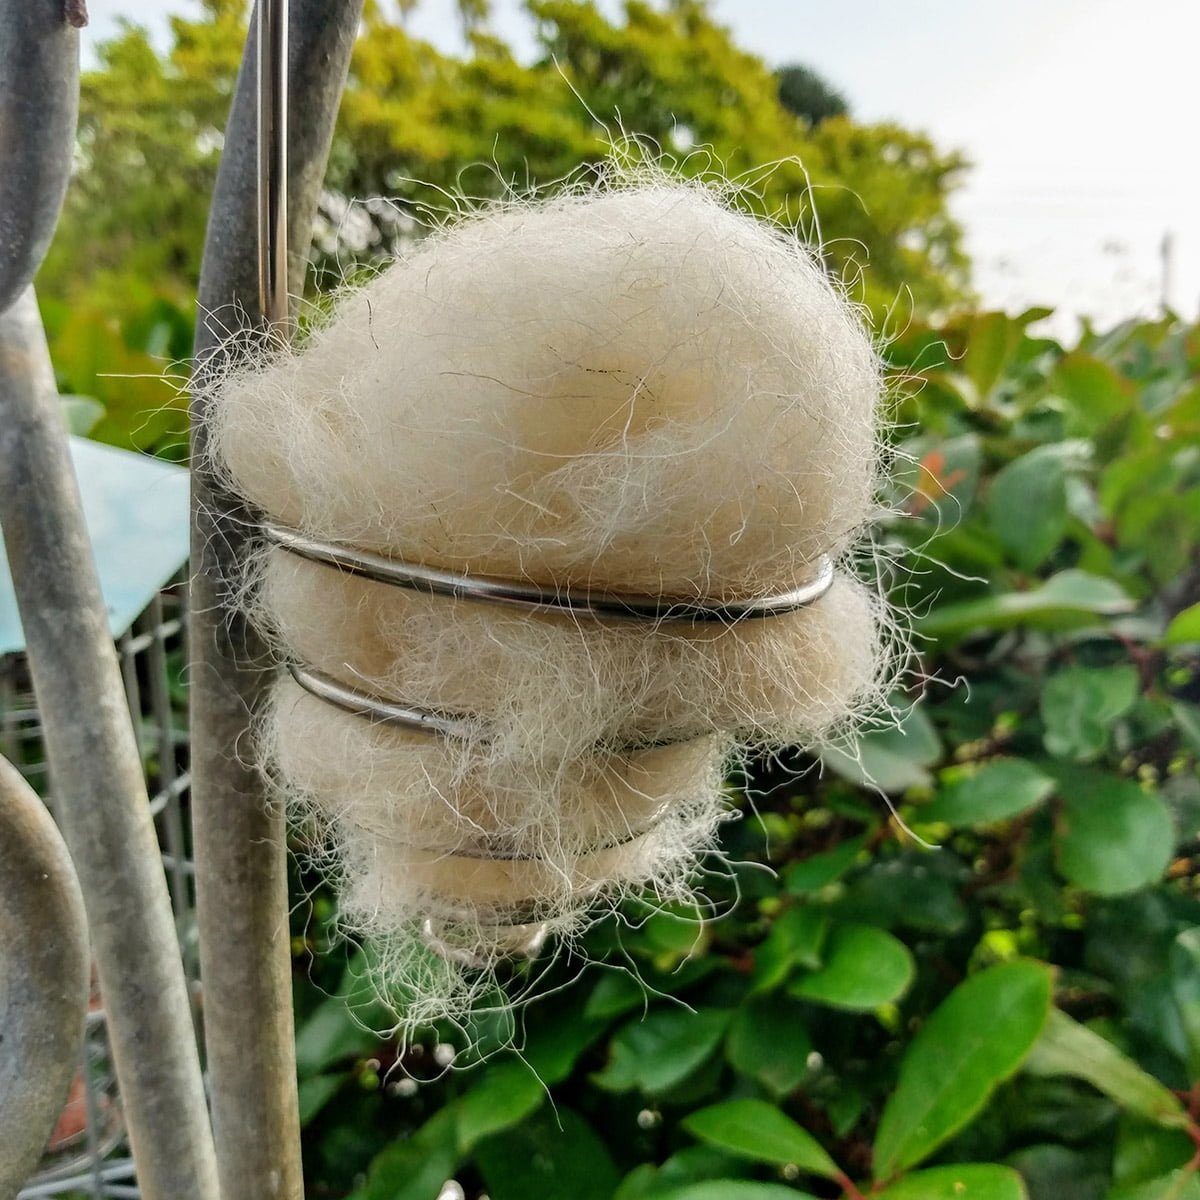 Twool nesting wool lifestyle